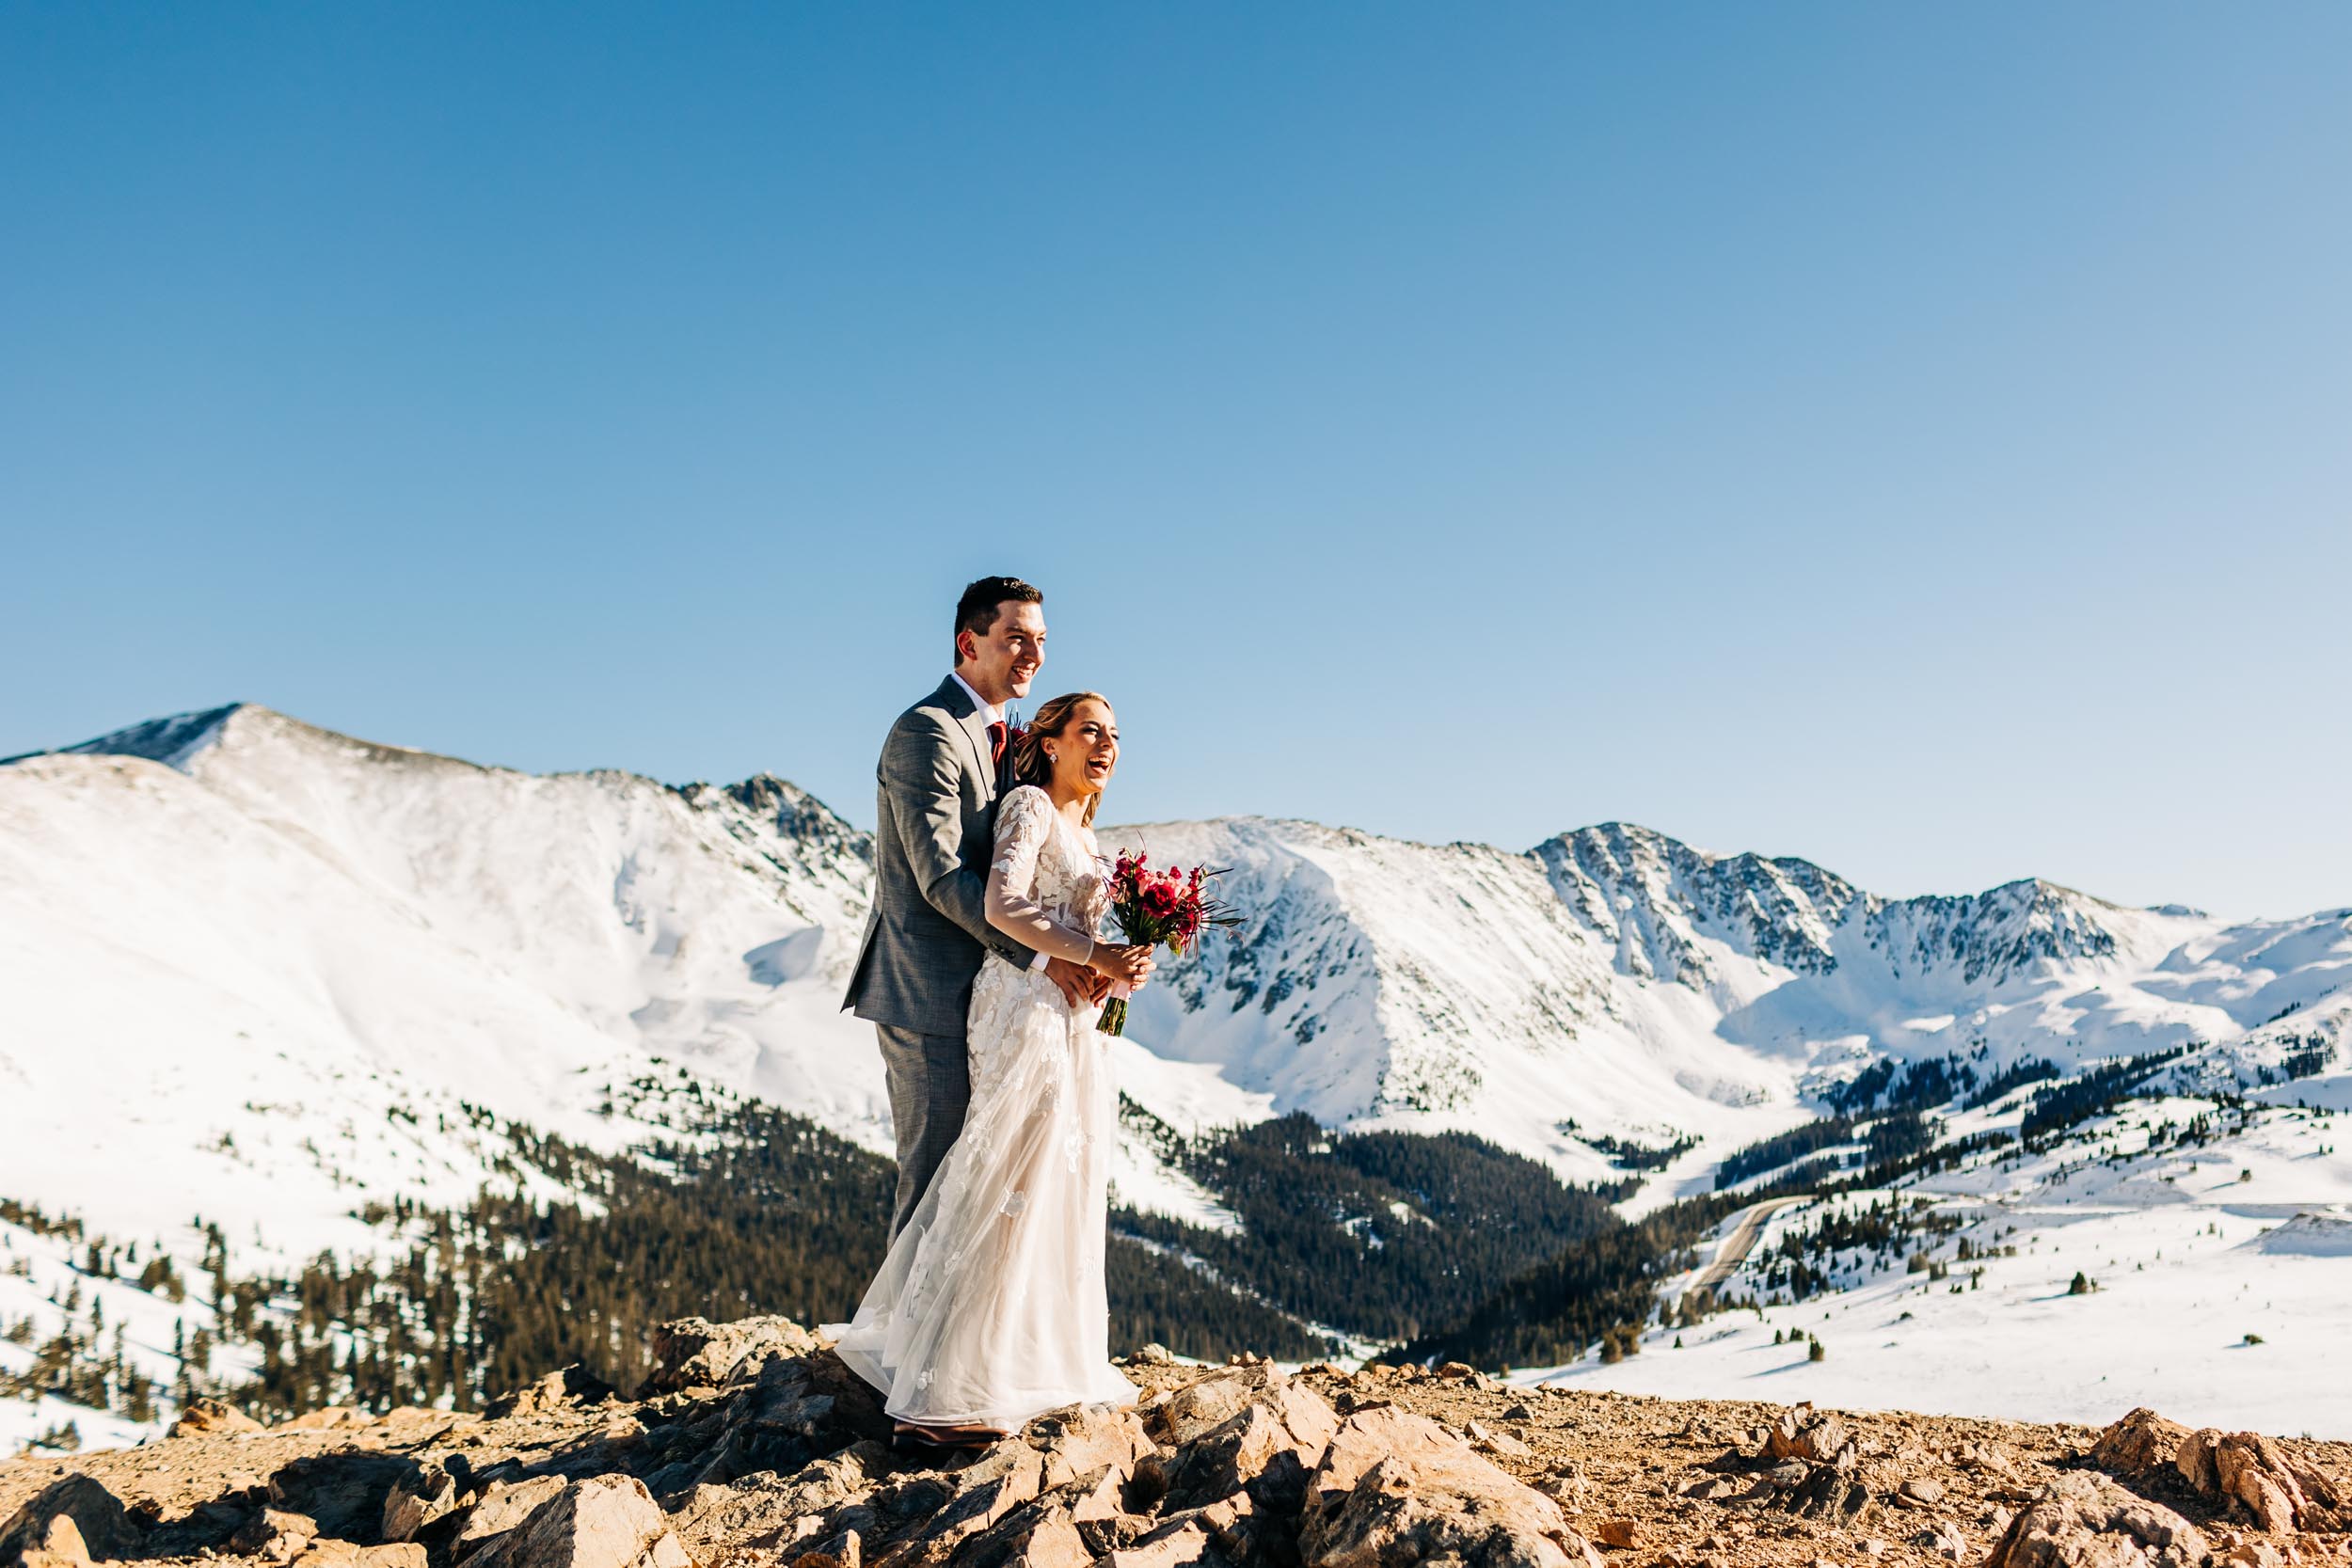 wedding photo taken at the top of loveland pass in colorado